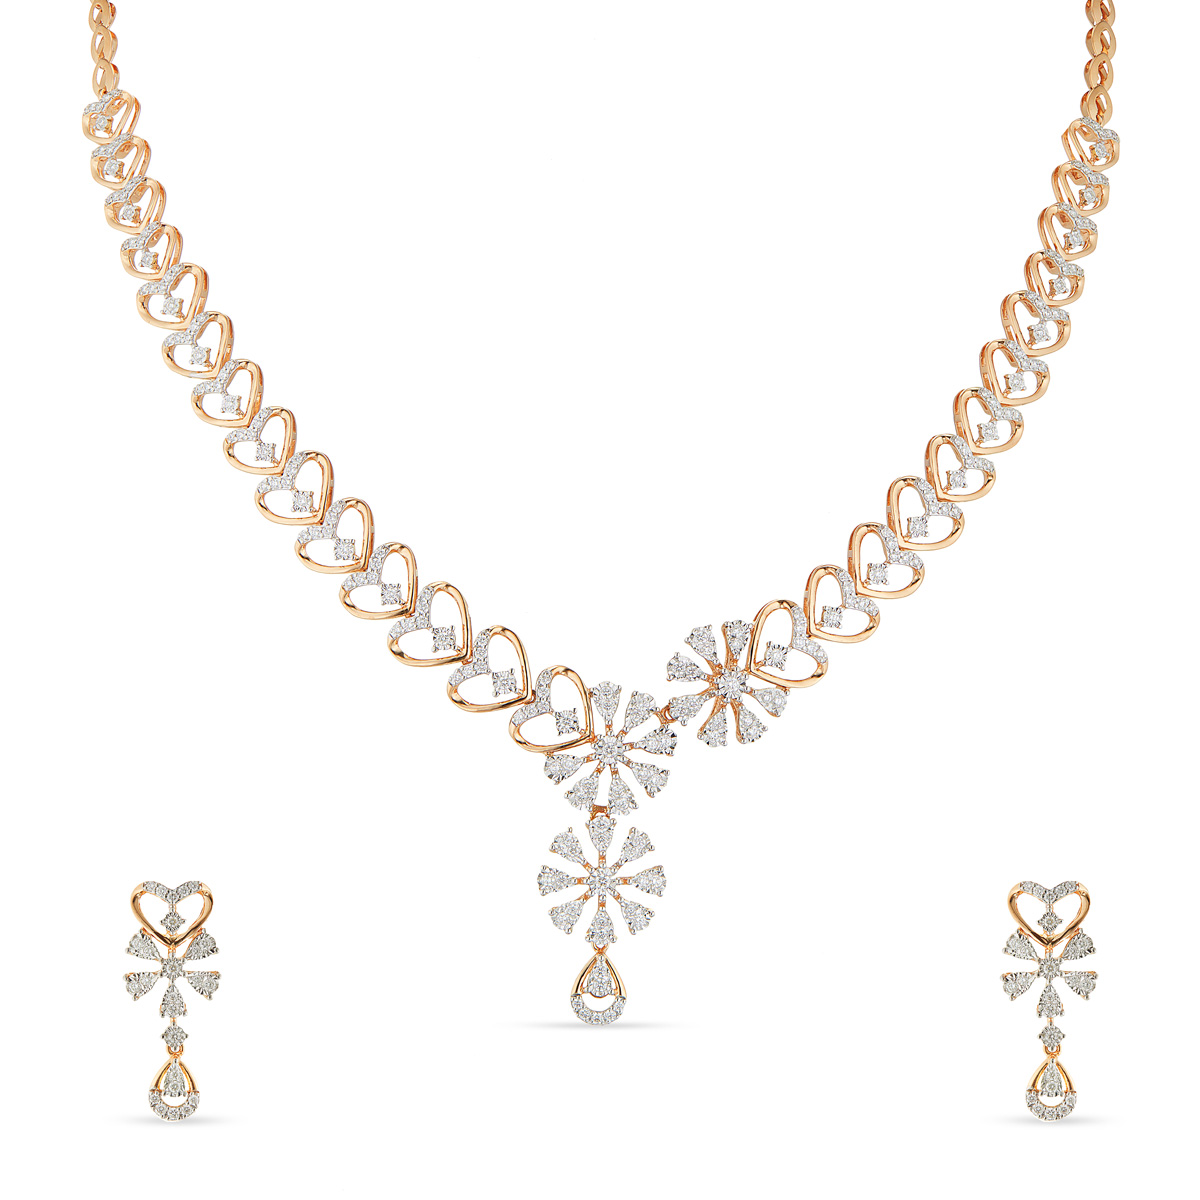 Brocade diamond necklace